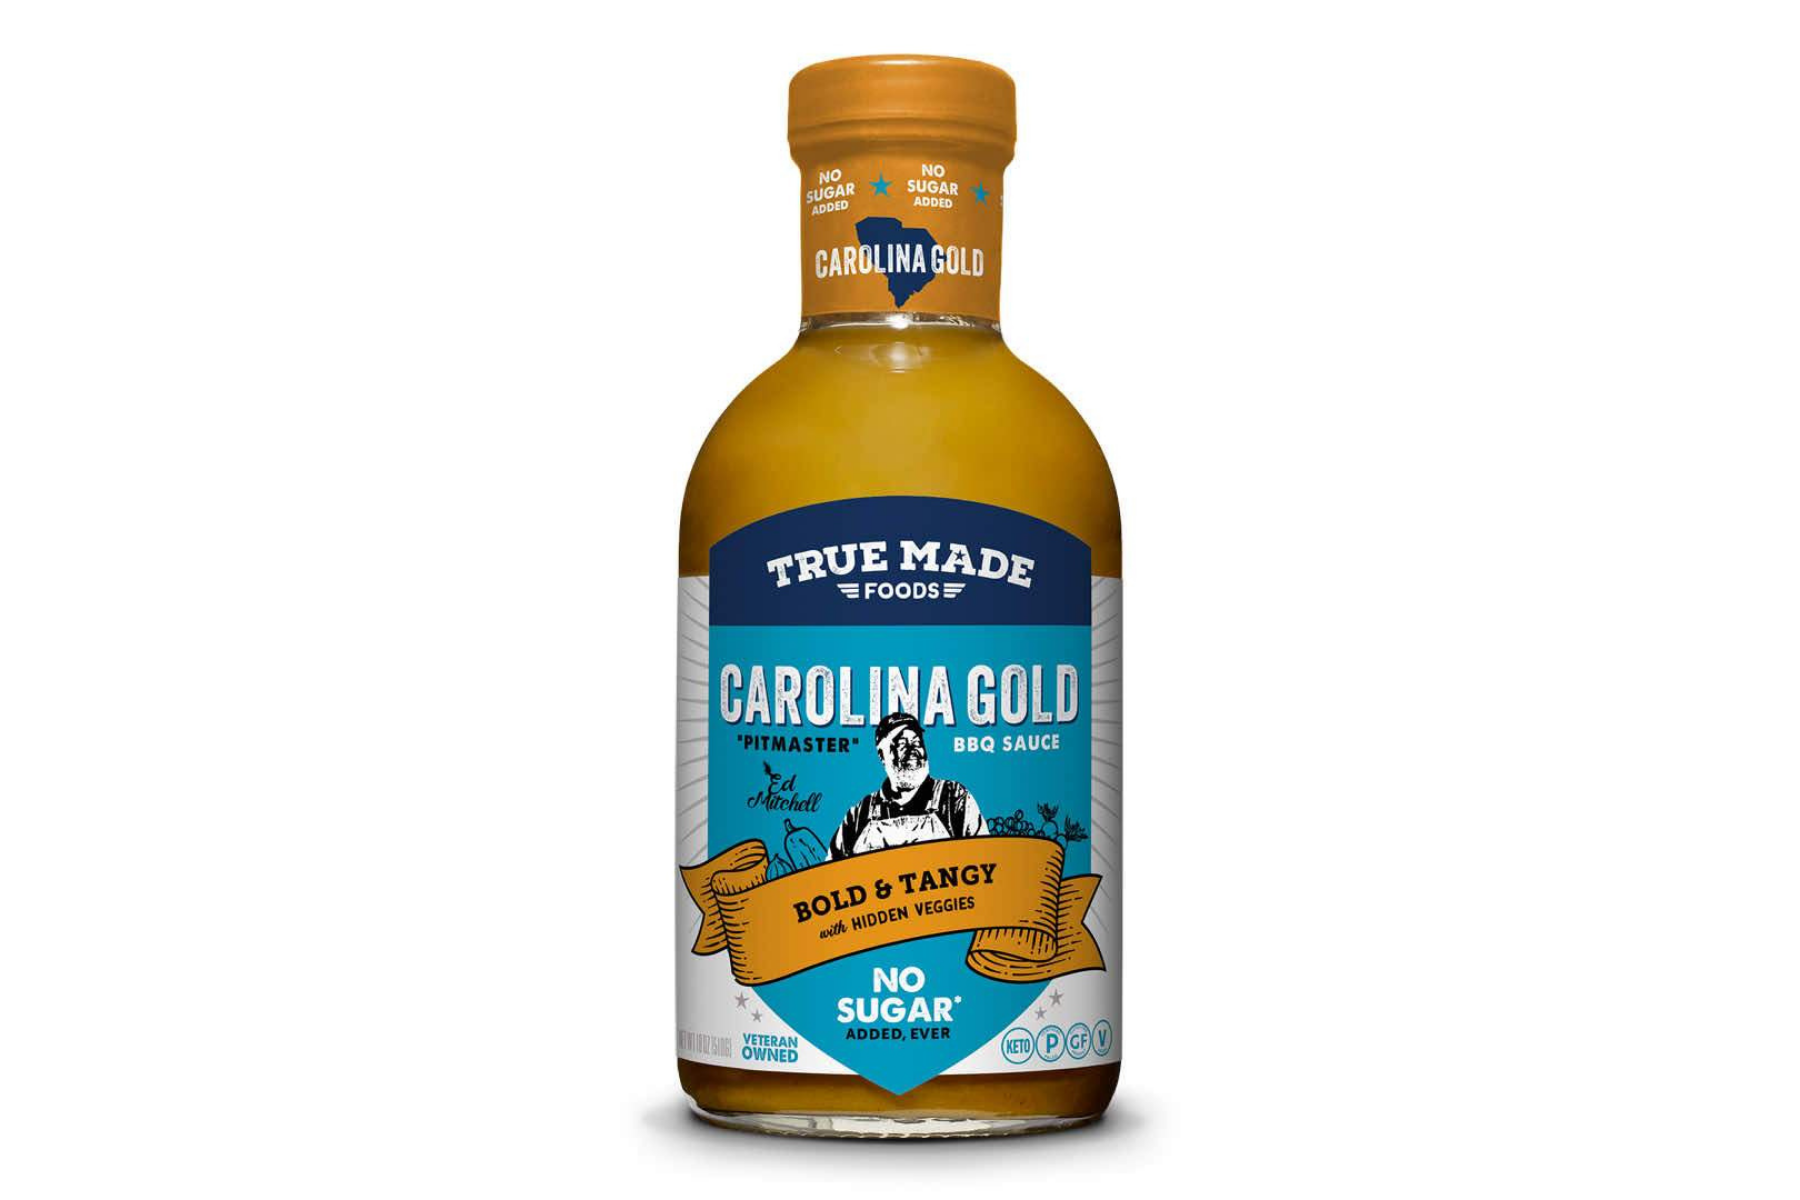 Bottle of True Made Foods Carolina Gold vegan BBQ sauce